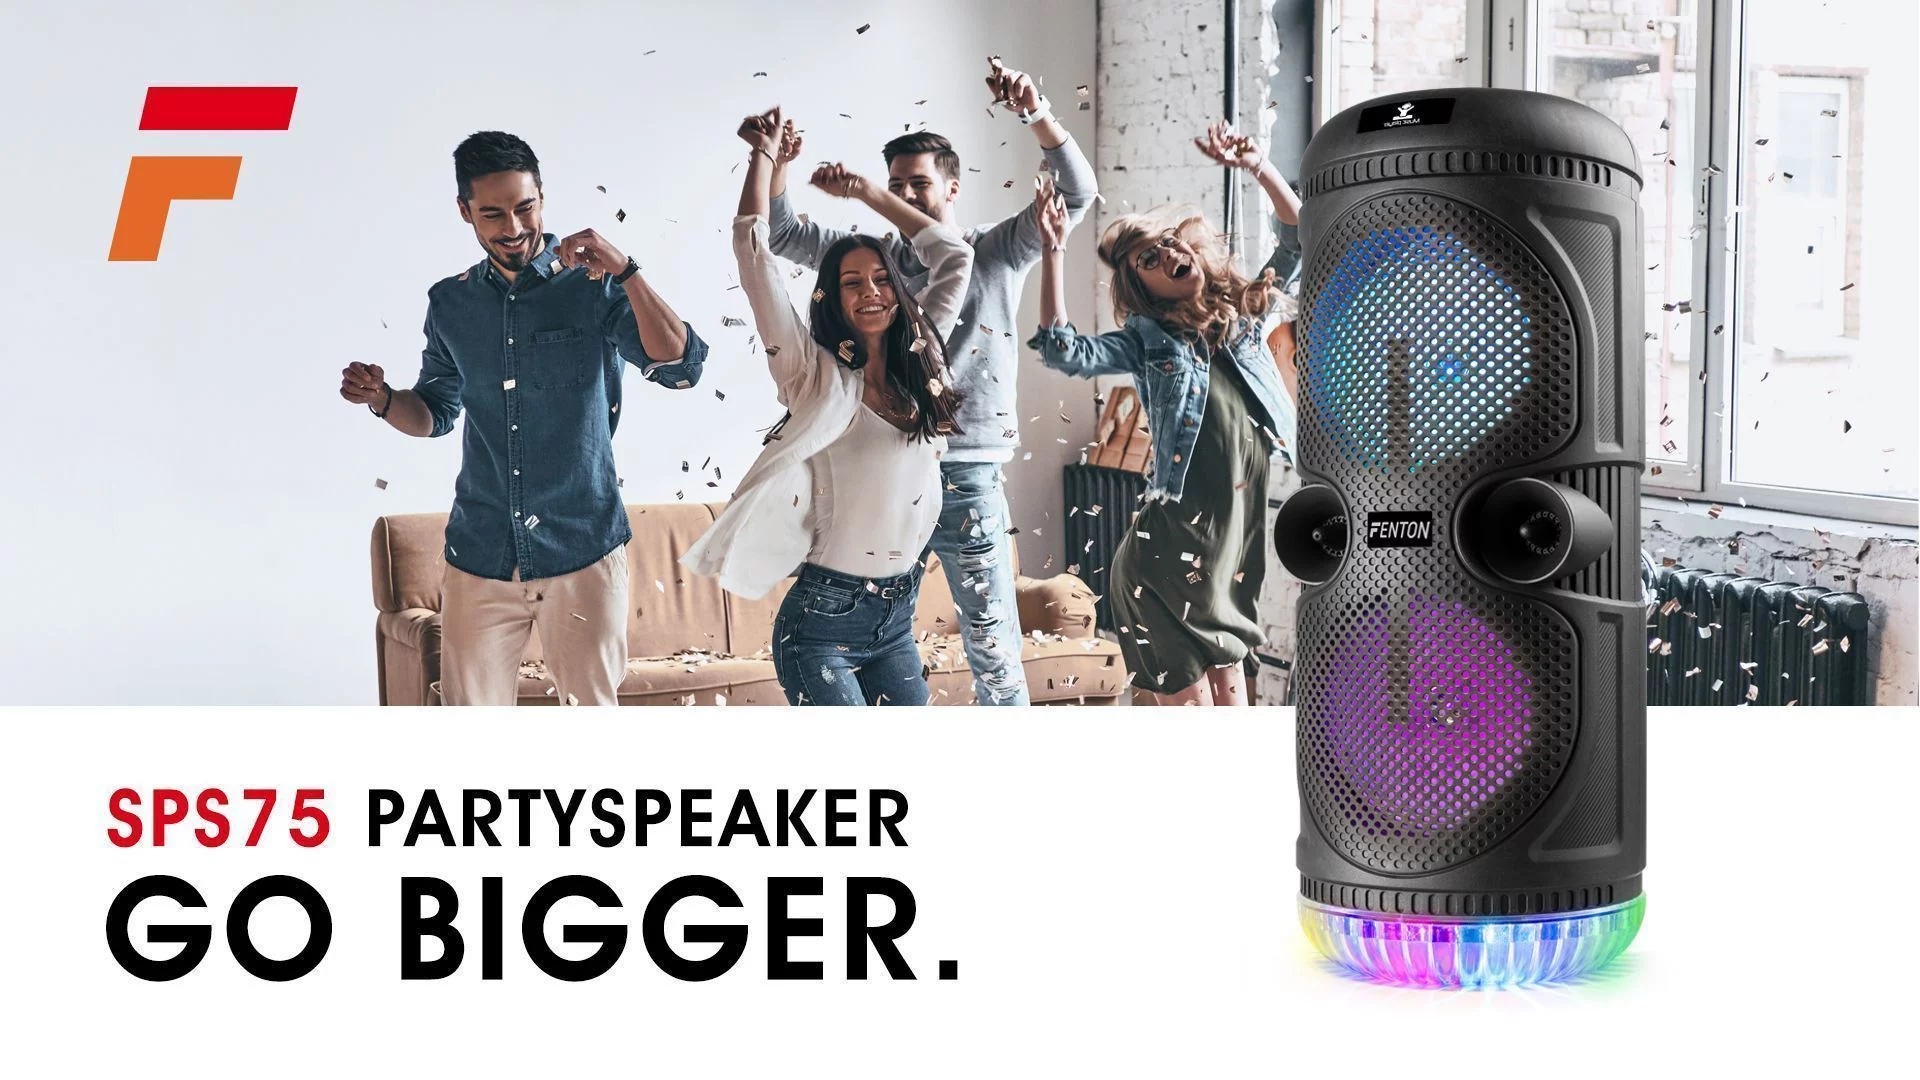 Fenton sps75 bluetooth speaker met karaoke en led discolampen 8